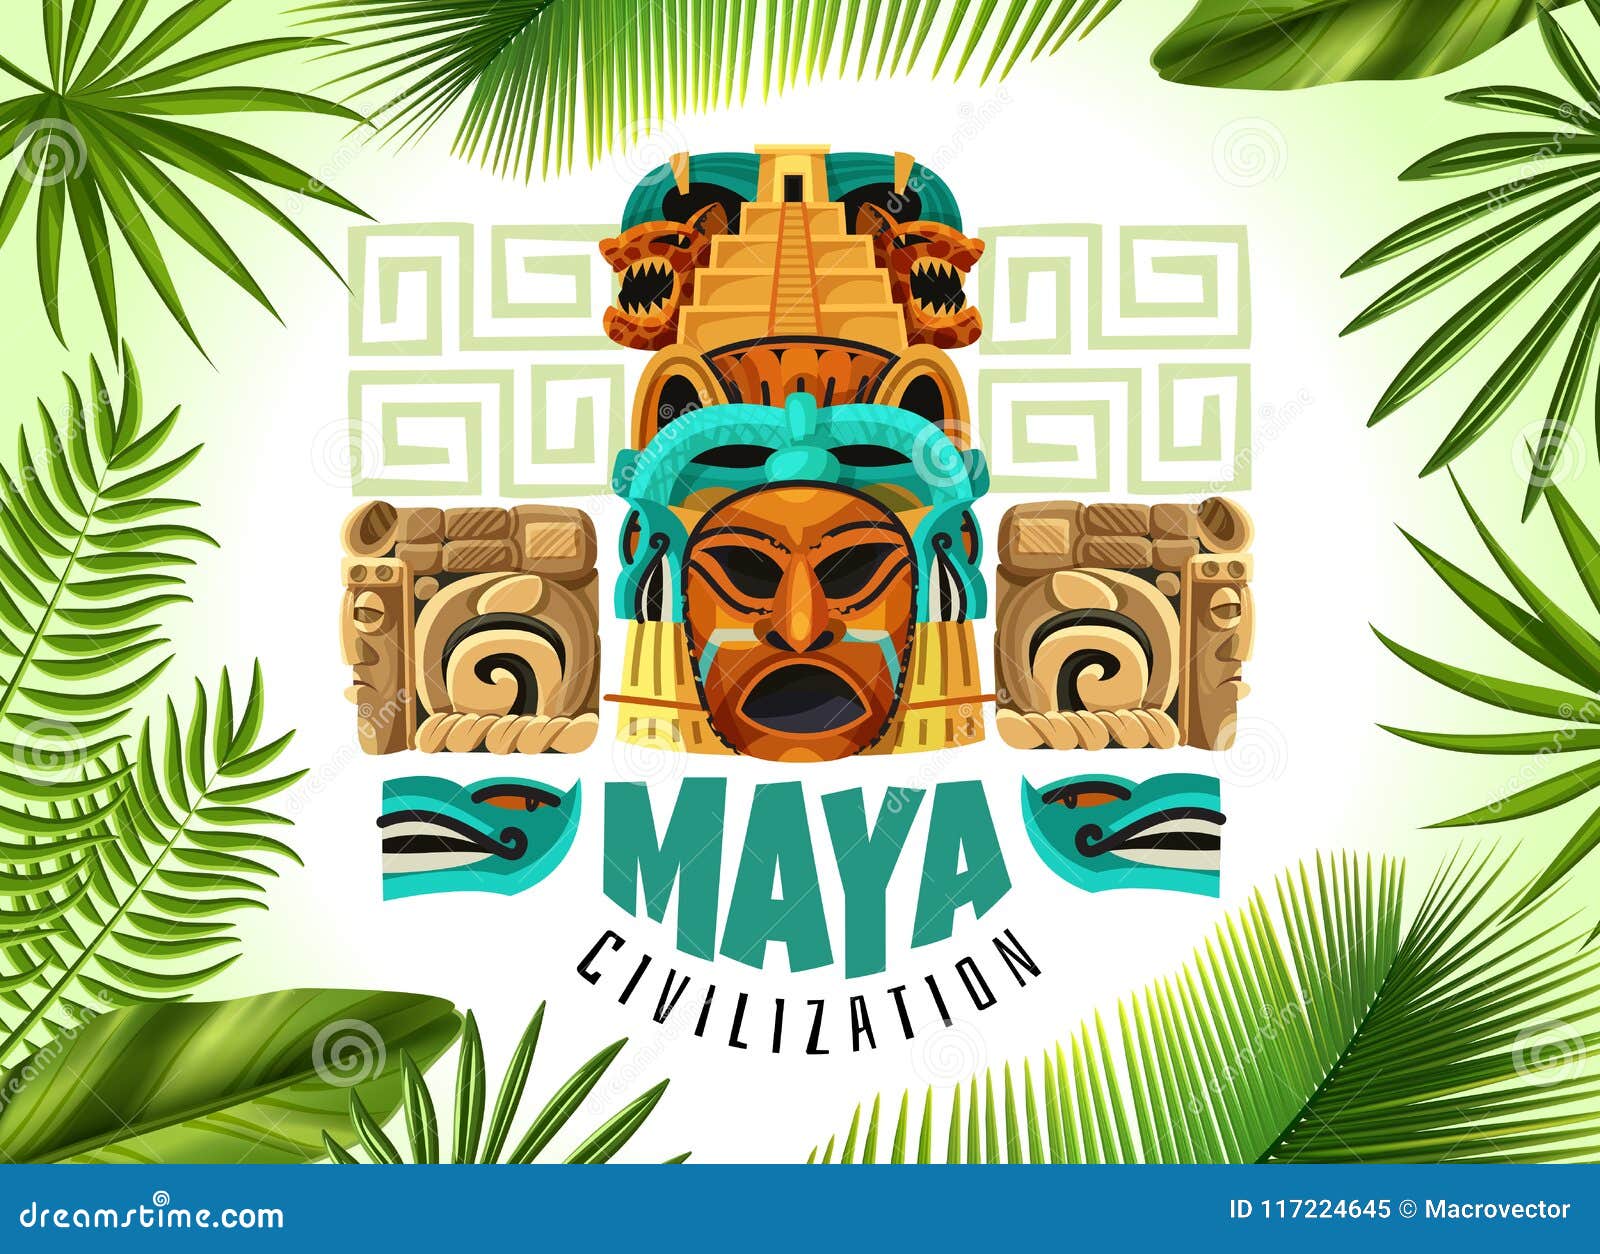 maya civilization horizontal poster